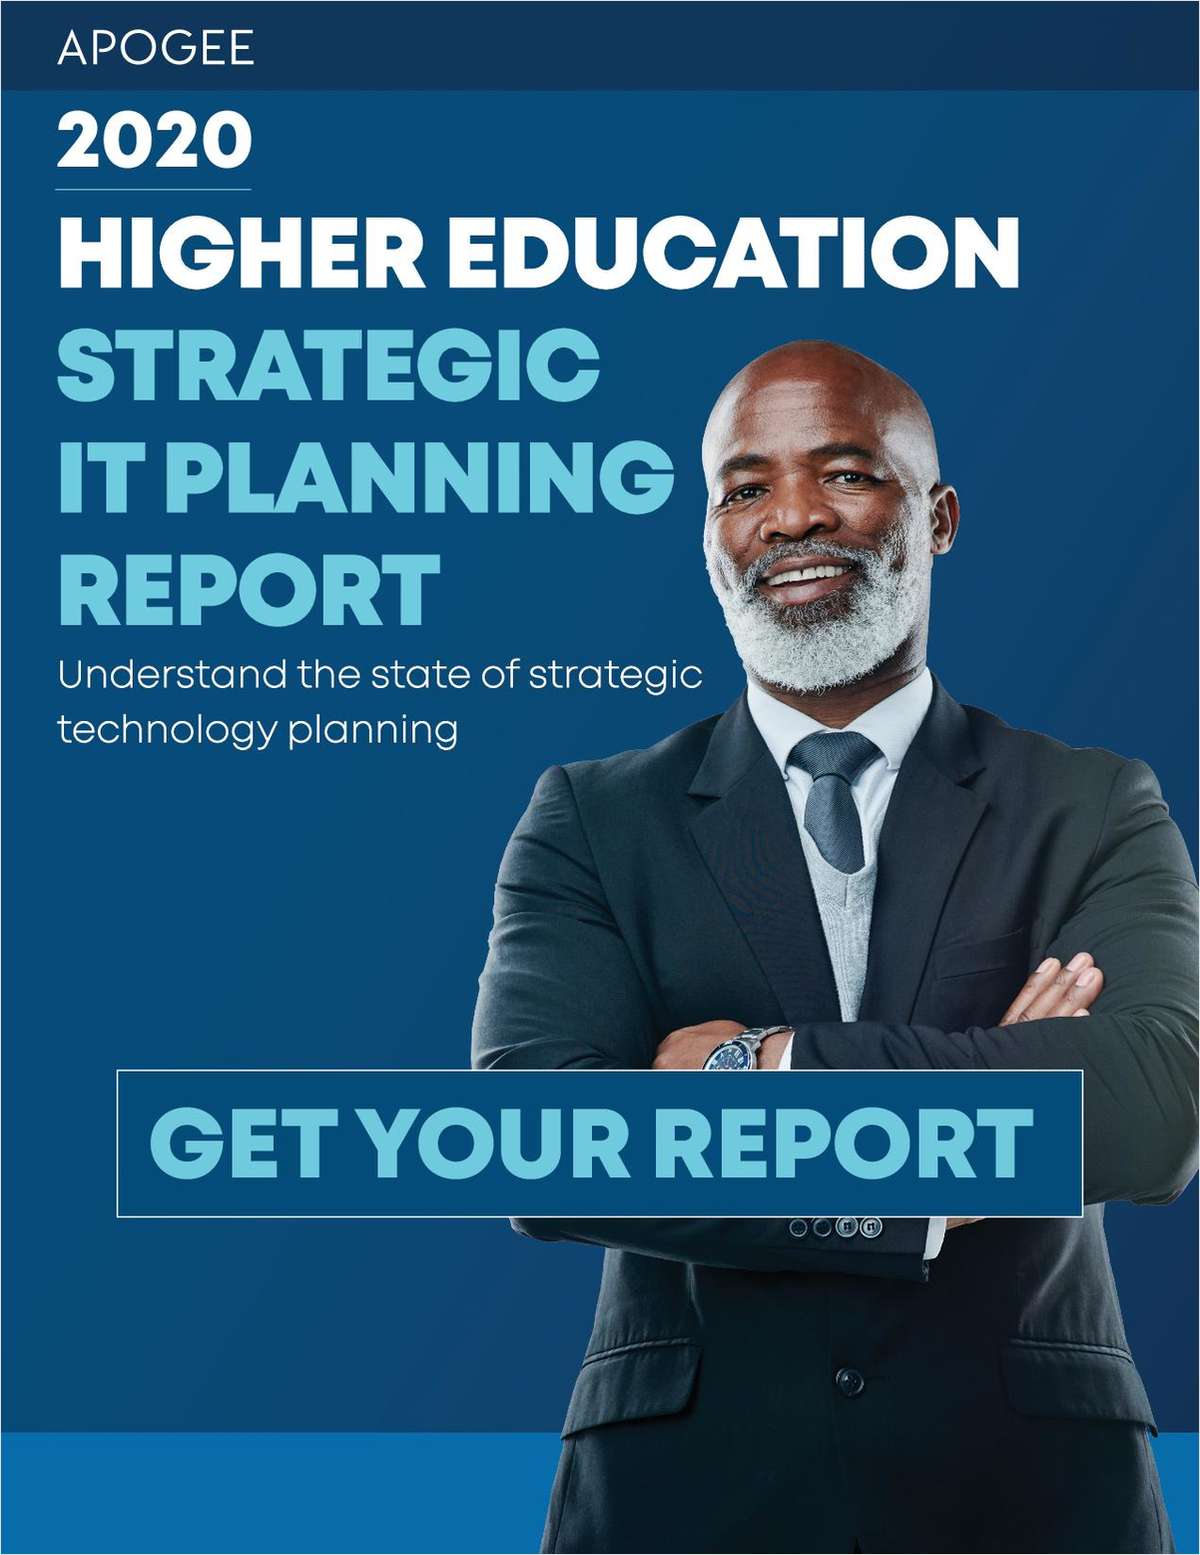 Higher Education Strategic IT Planning Report